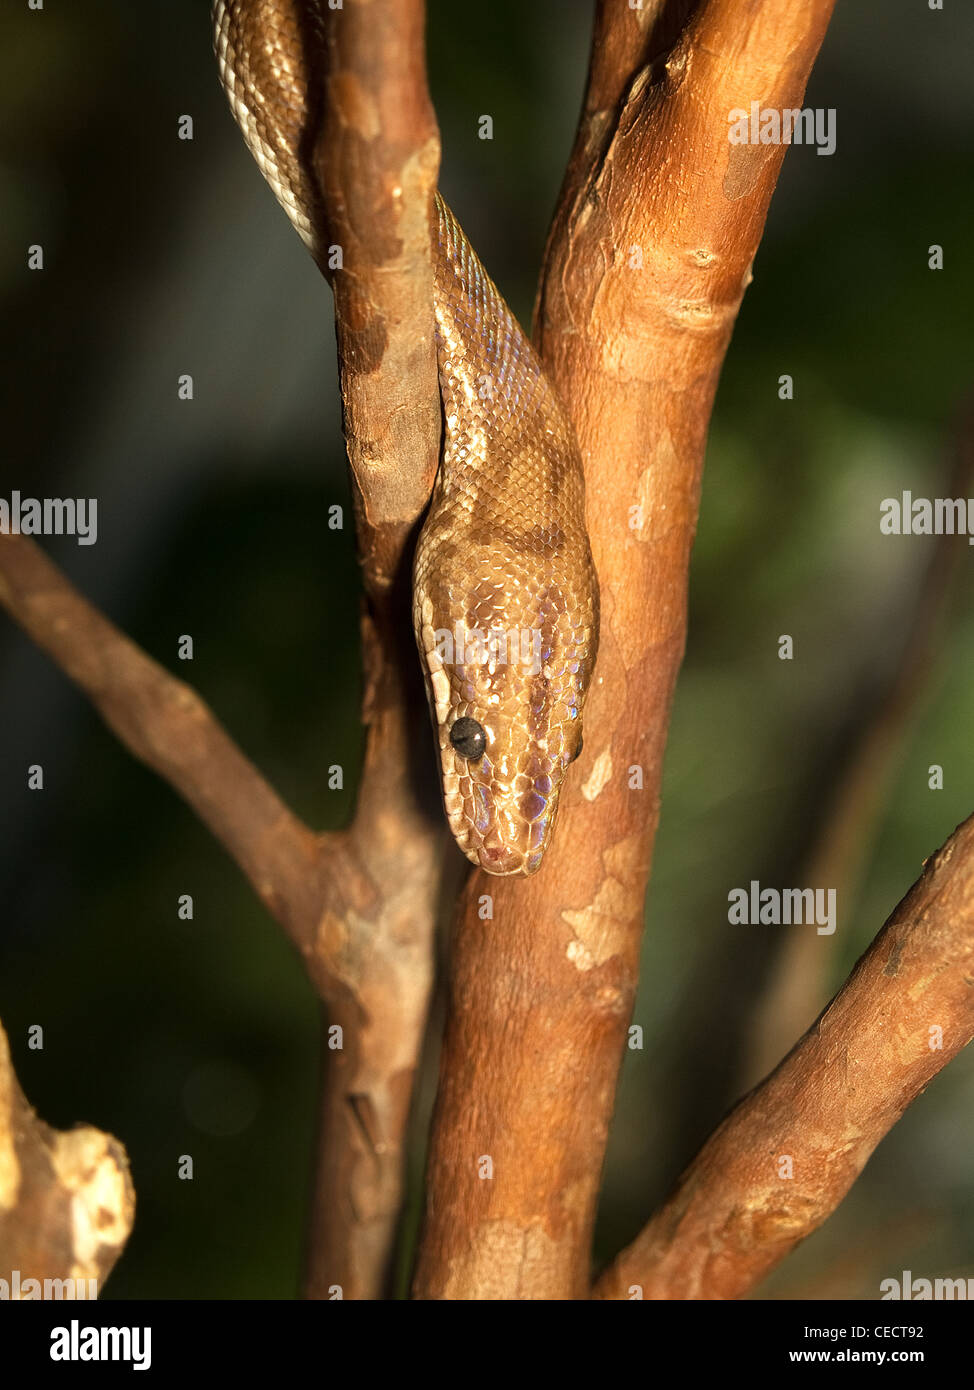 Raimbow boa, Epicrates cenchria cenchria, vertical portrait of young snake. Stock Photo